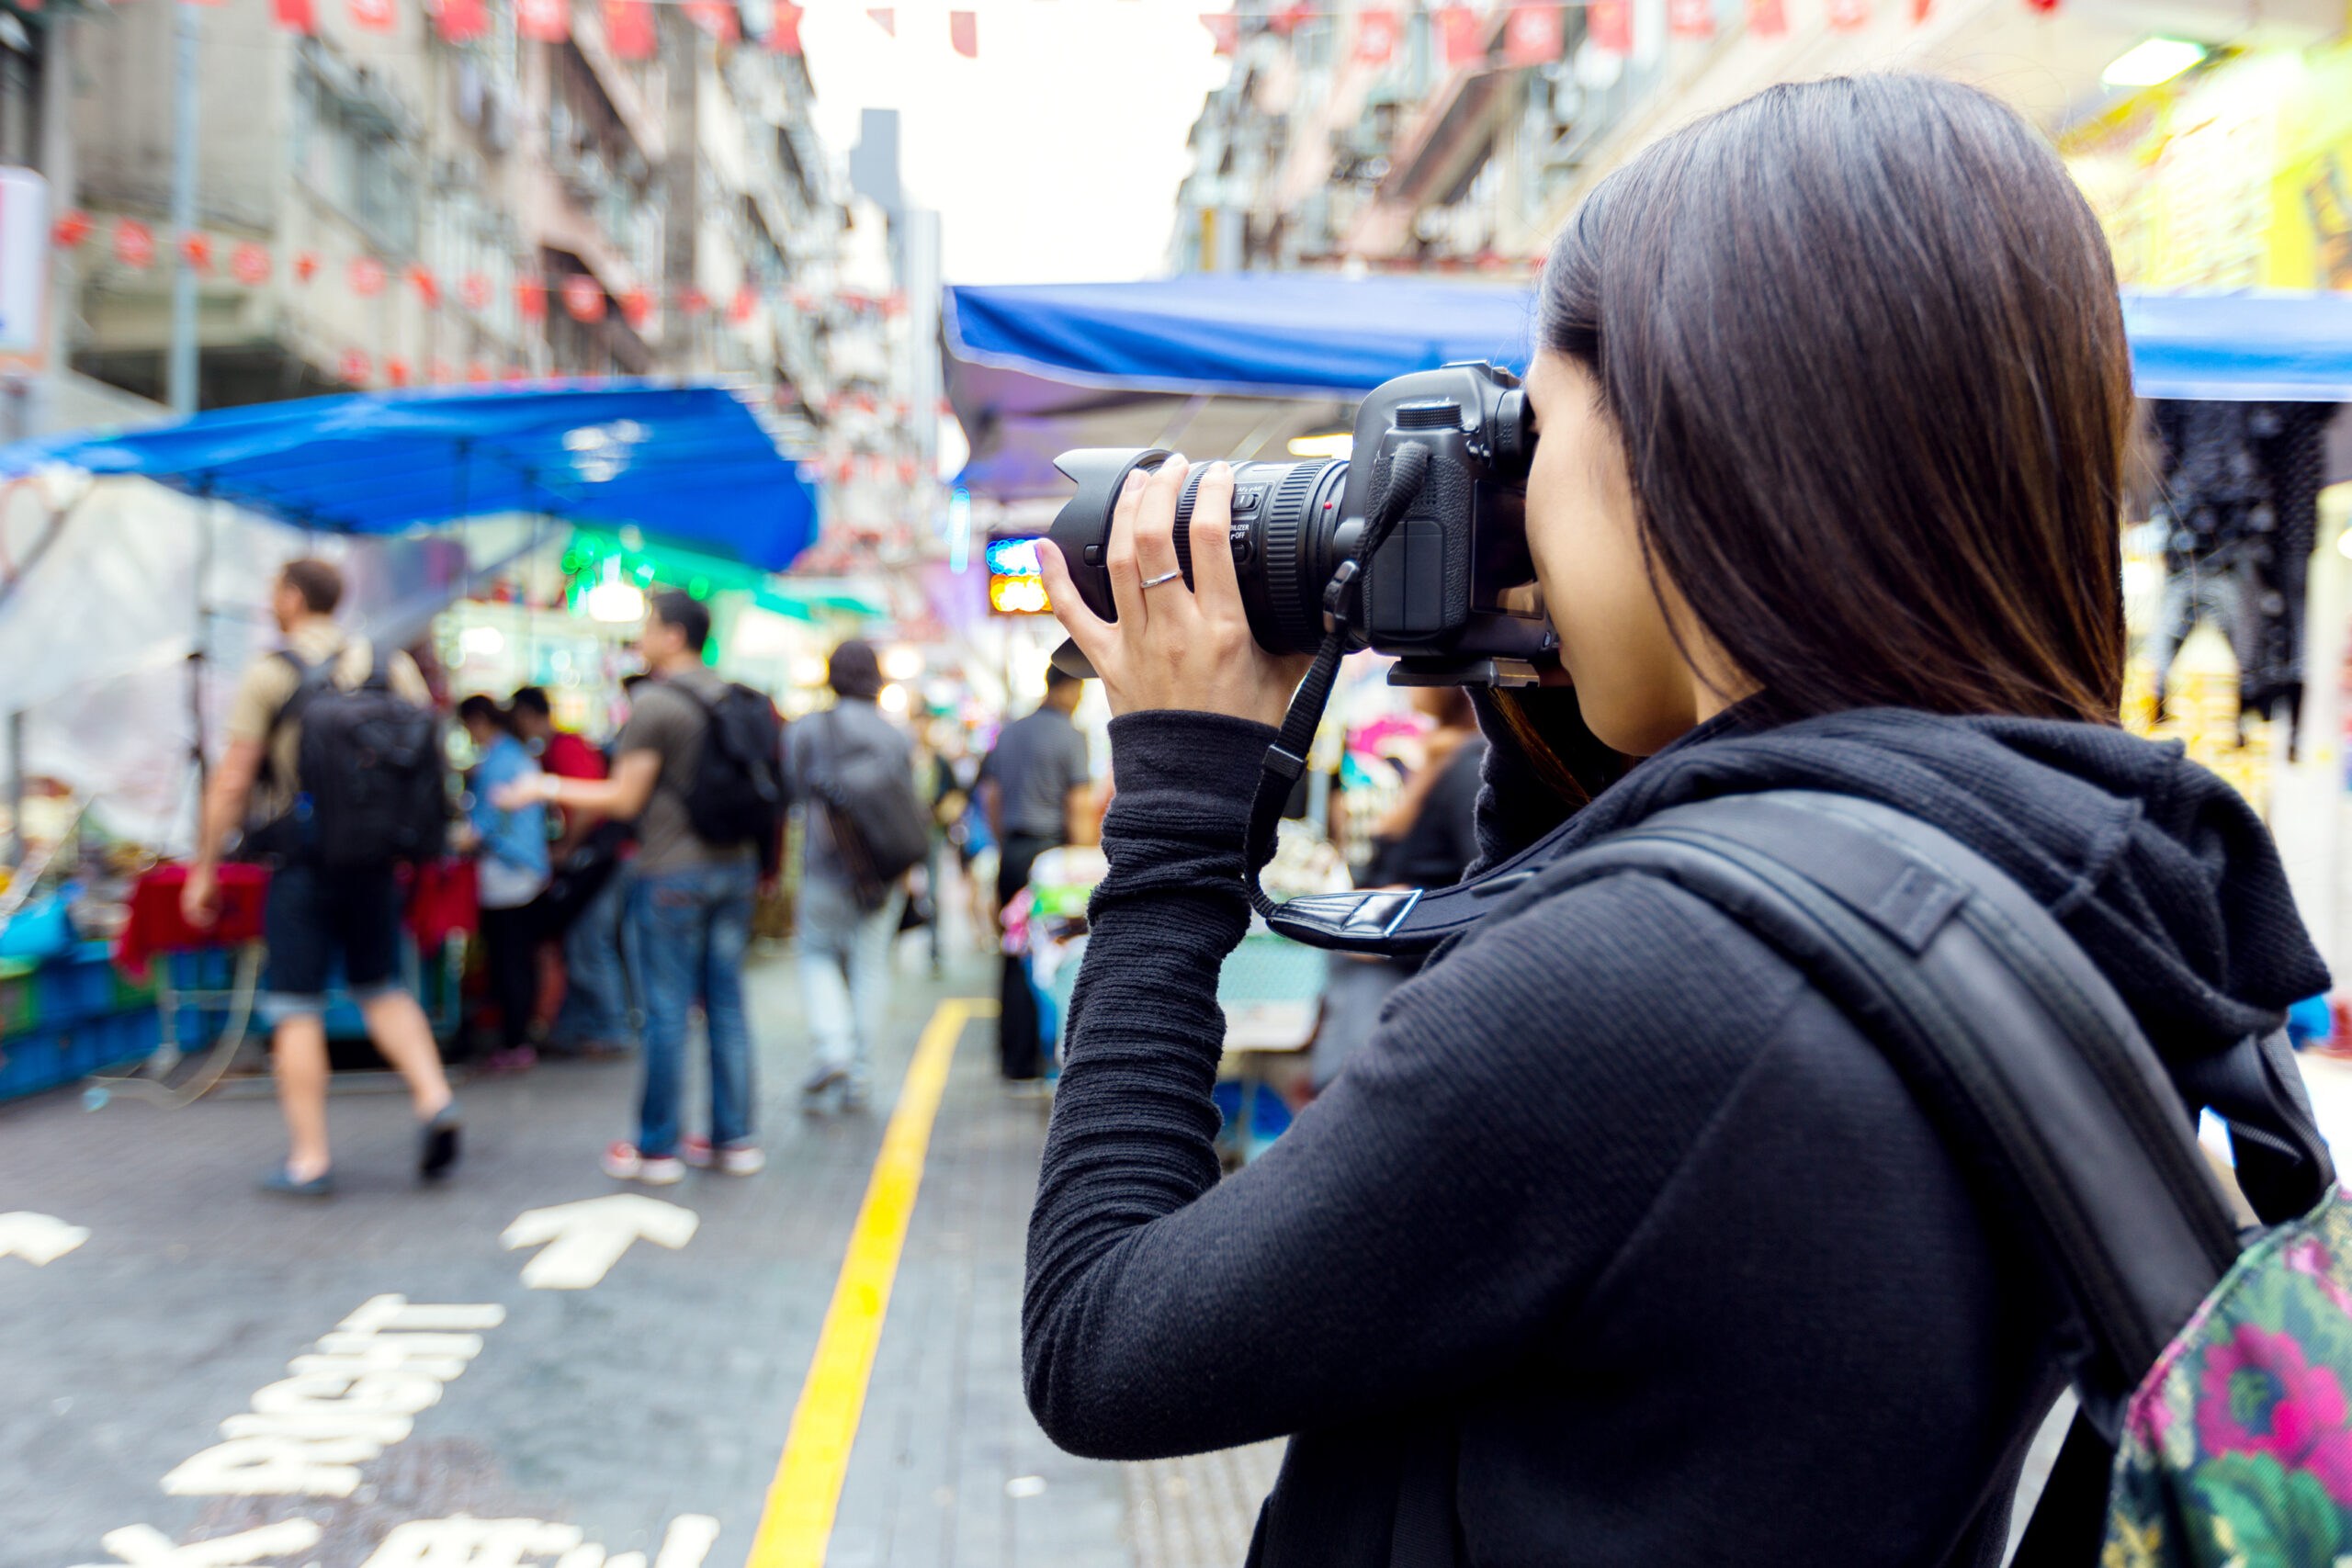 Tourist,Taking,Photo,With,Camera